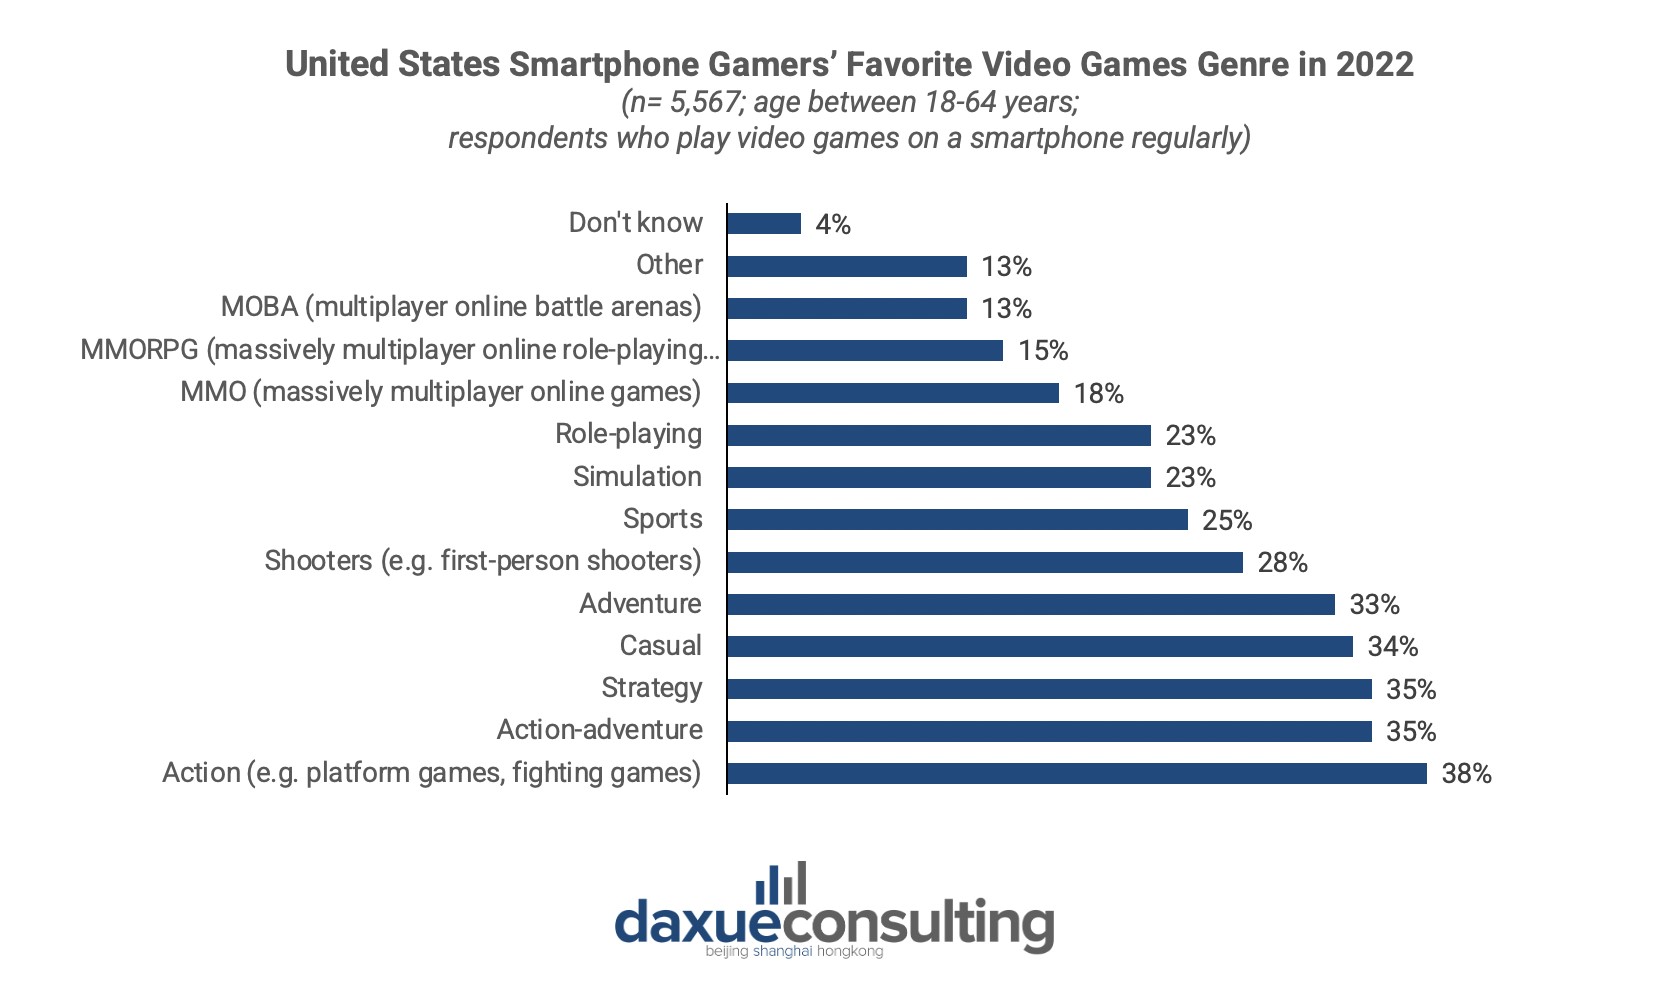 U.S. smartphone gamers' favorite video game genres in 2022